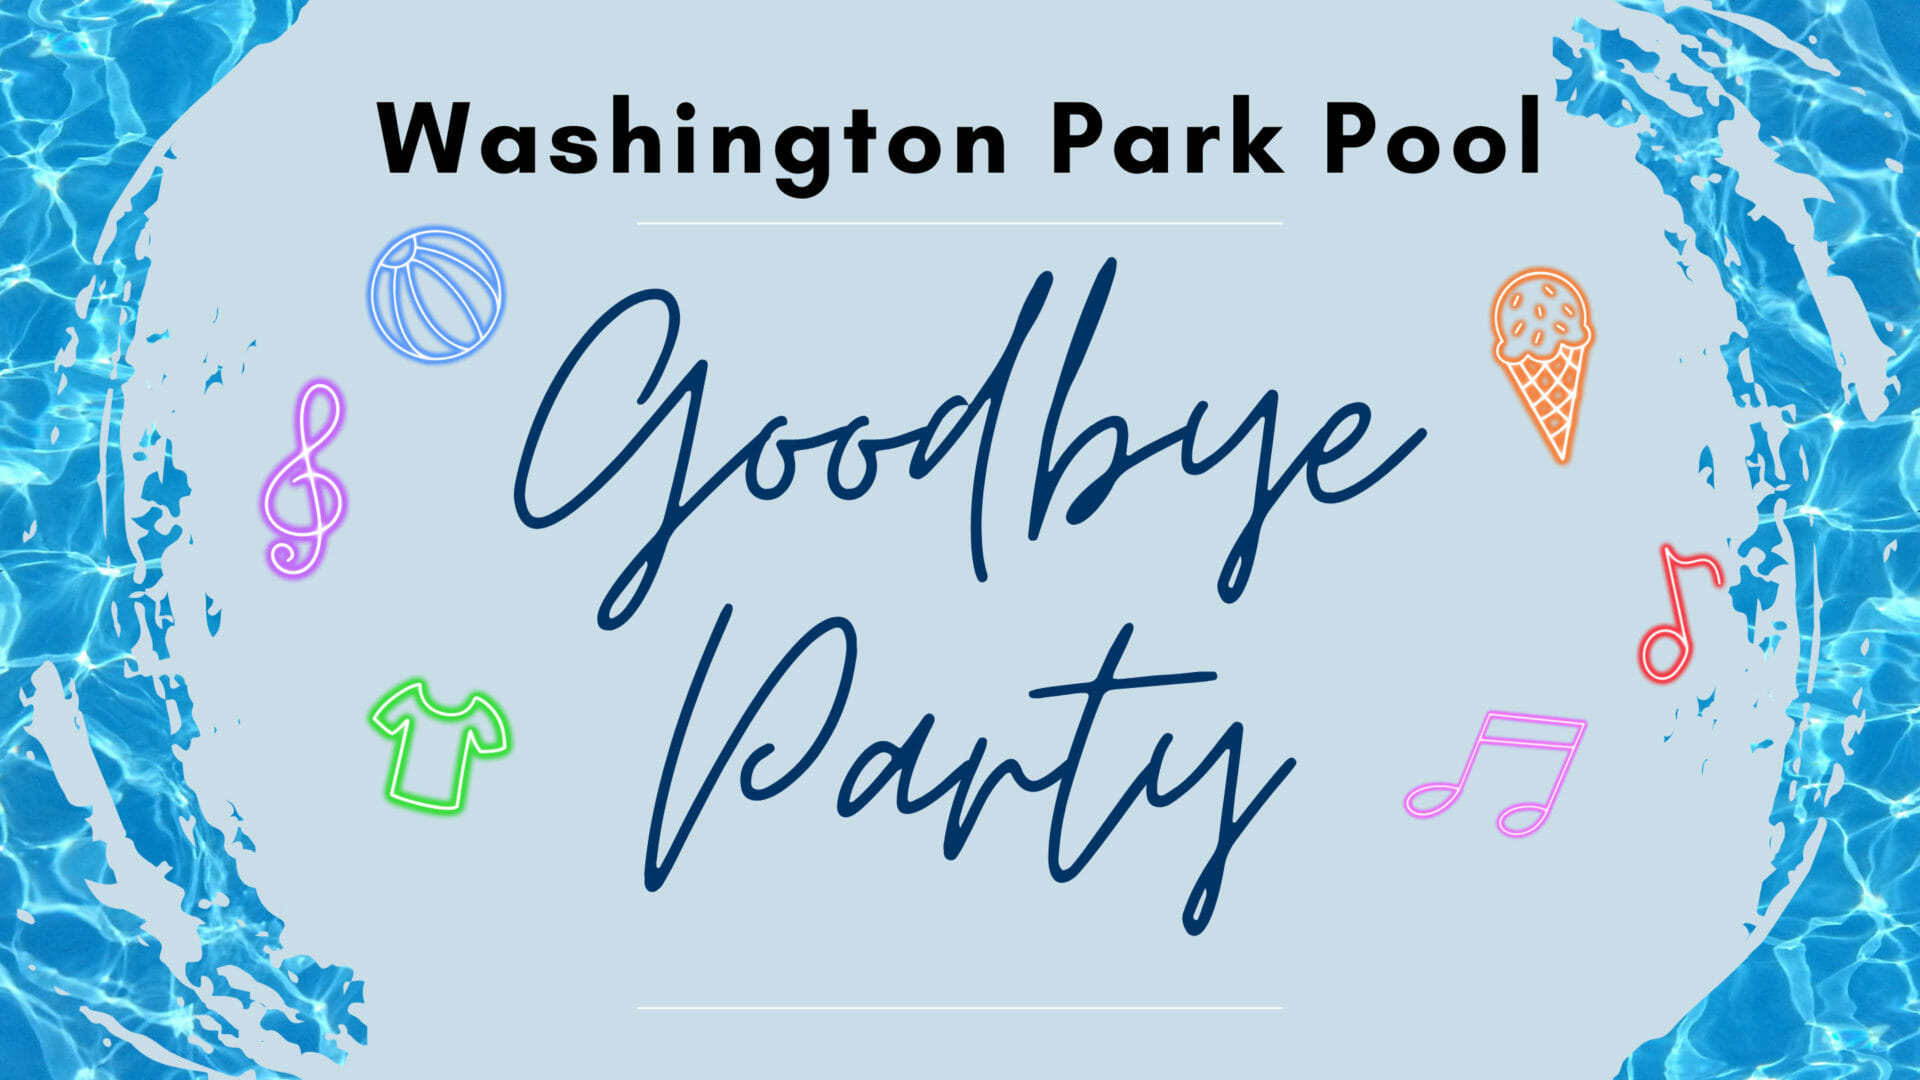 Washington Pool Goodbye Party